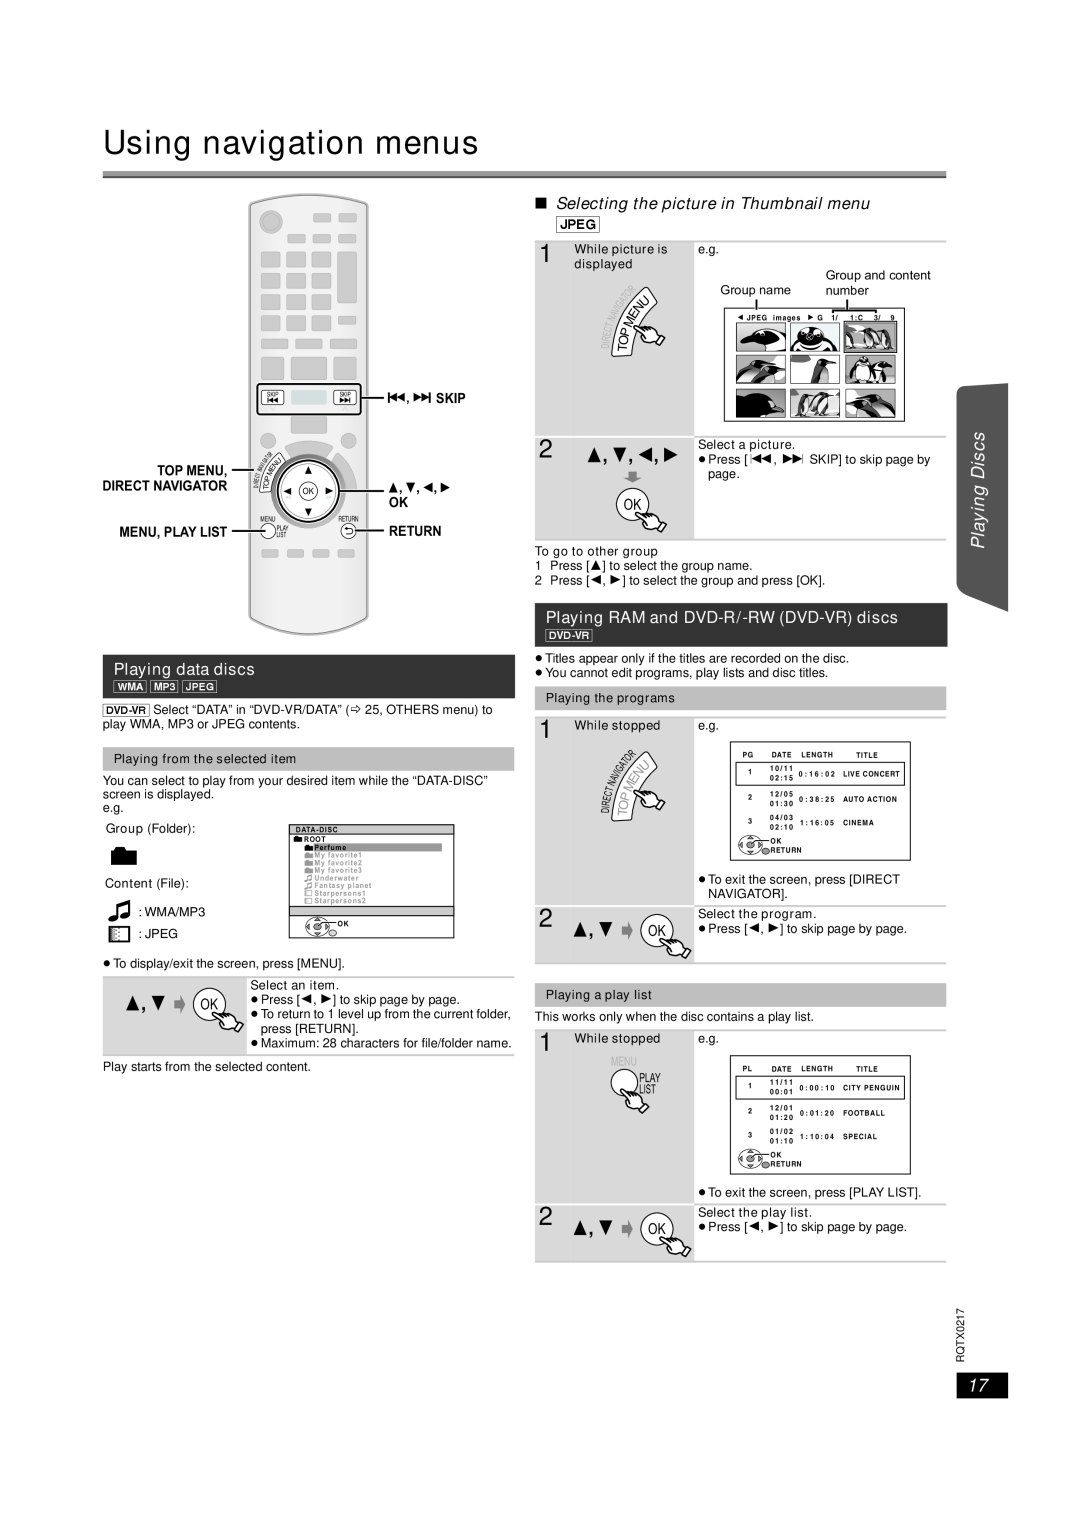 Panasonic SC-PT464 Using navigation menus, Other Reference, Jpeg, Playing data discs, Getting Started Playing Discs, Skip 